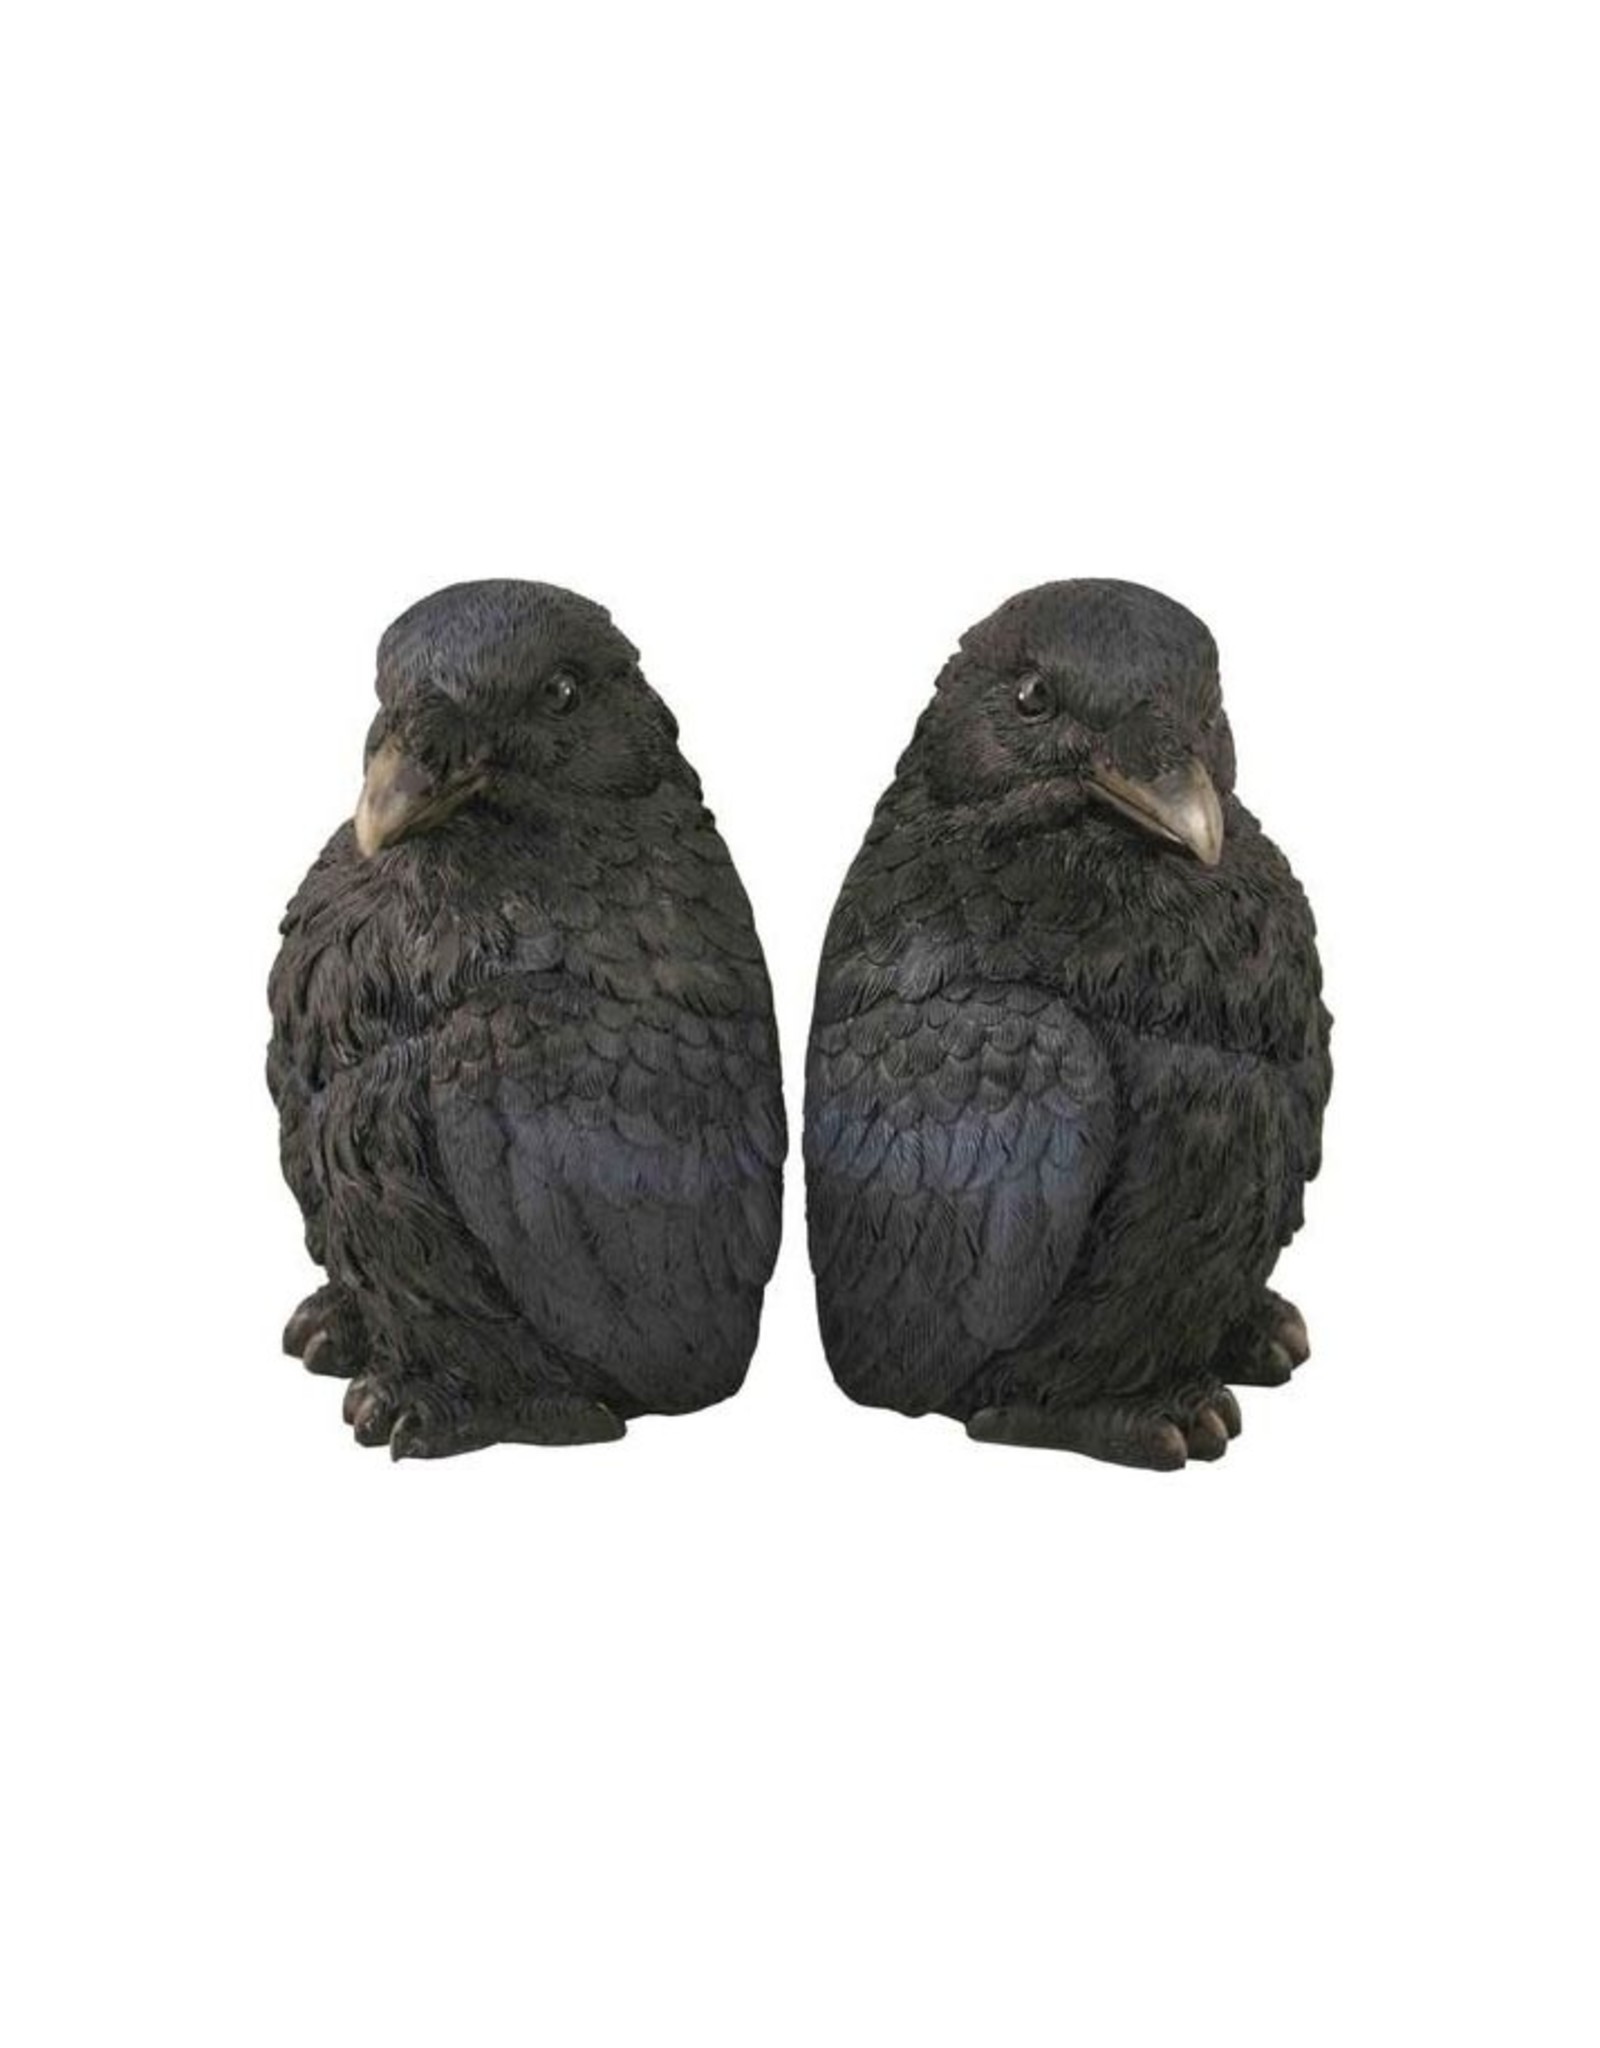 Corvus (Crows) Bookend Set